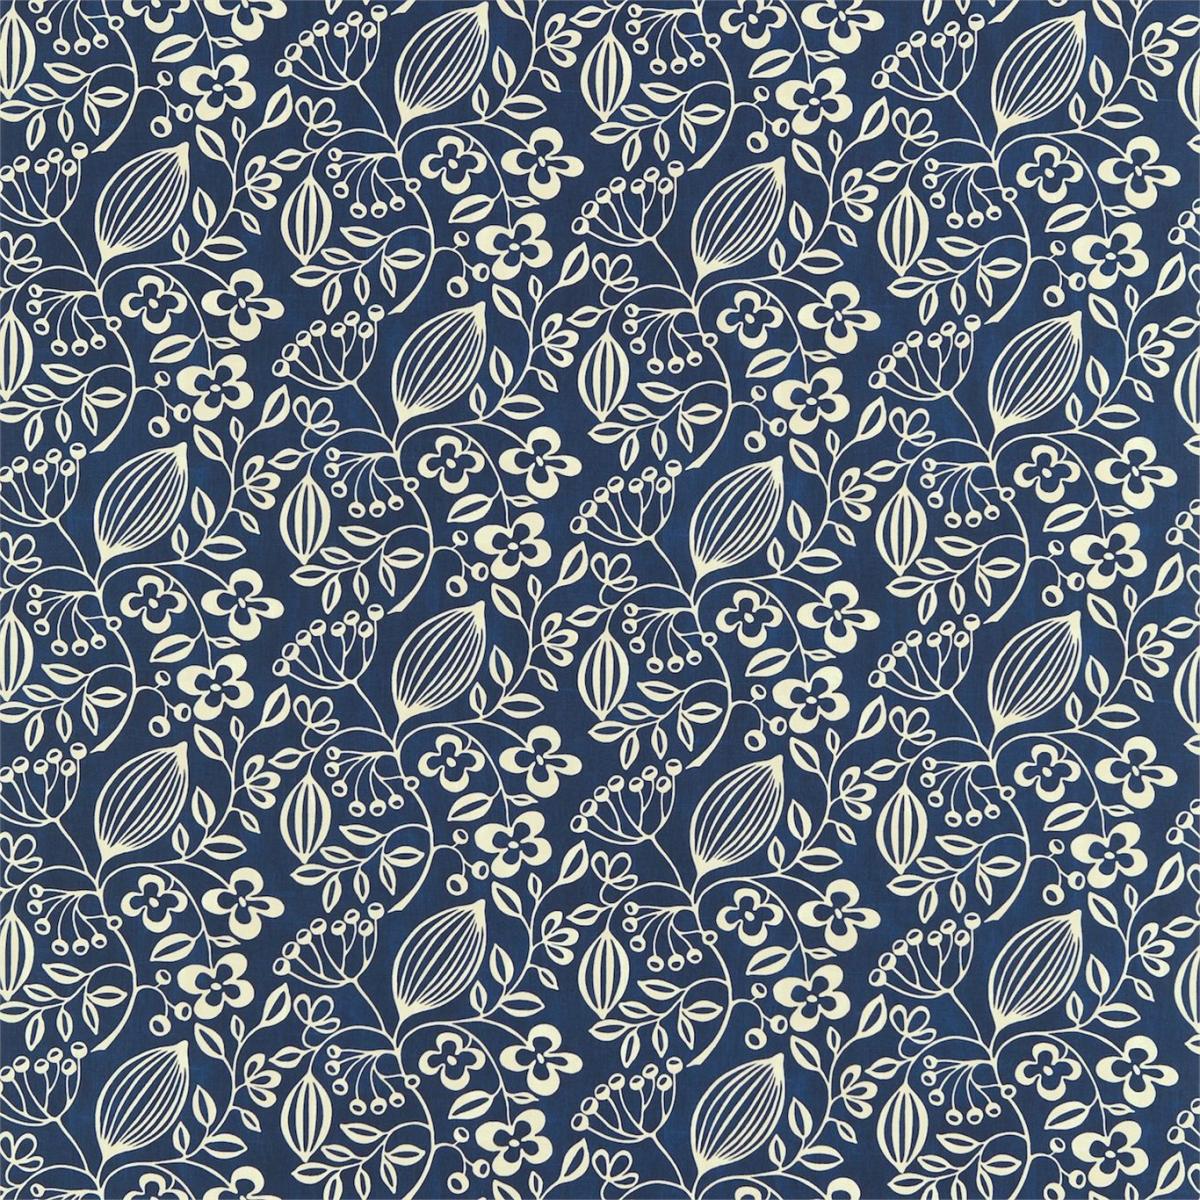 Ткань Scion Melinki One Fabrics 120103 